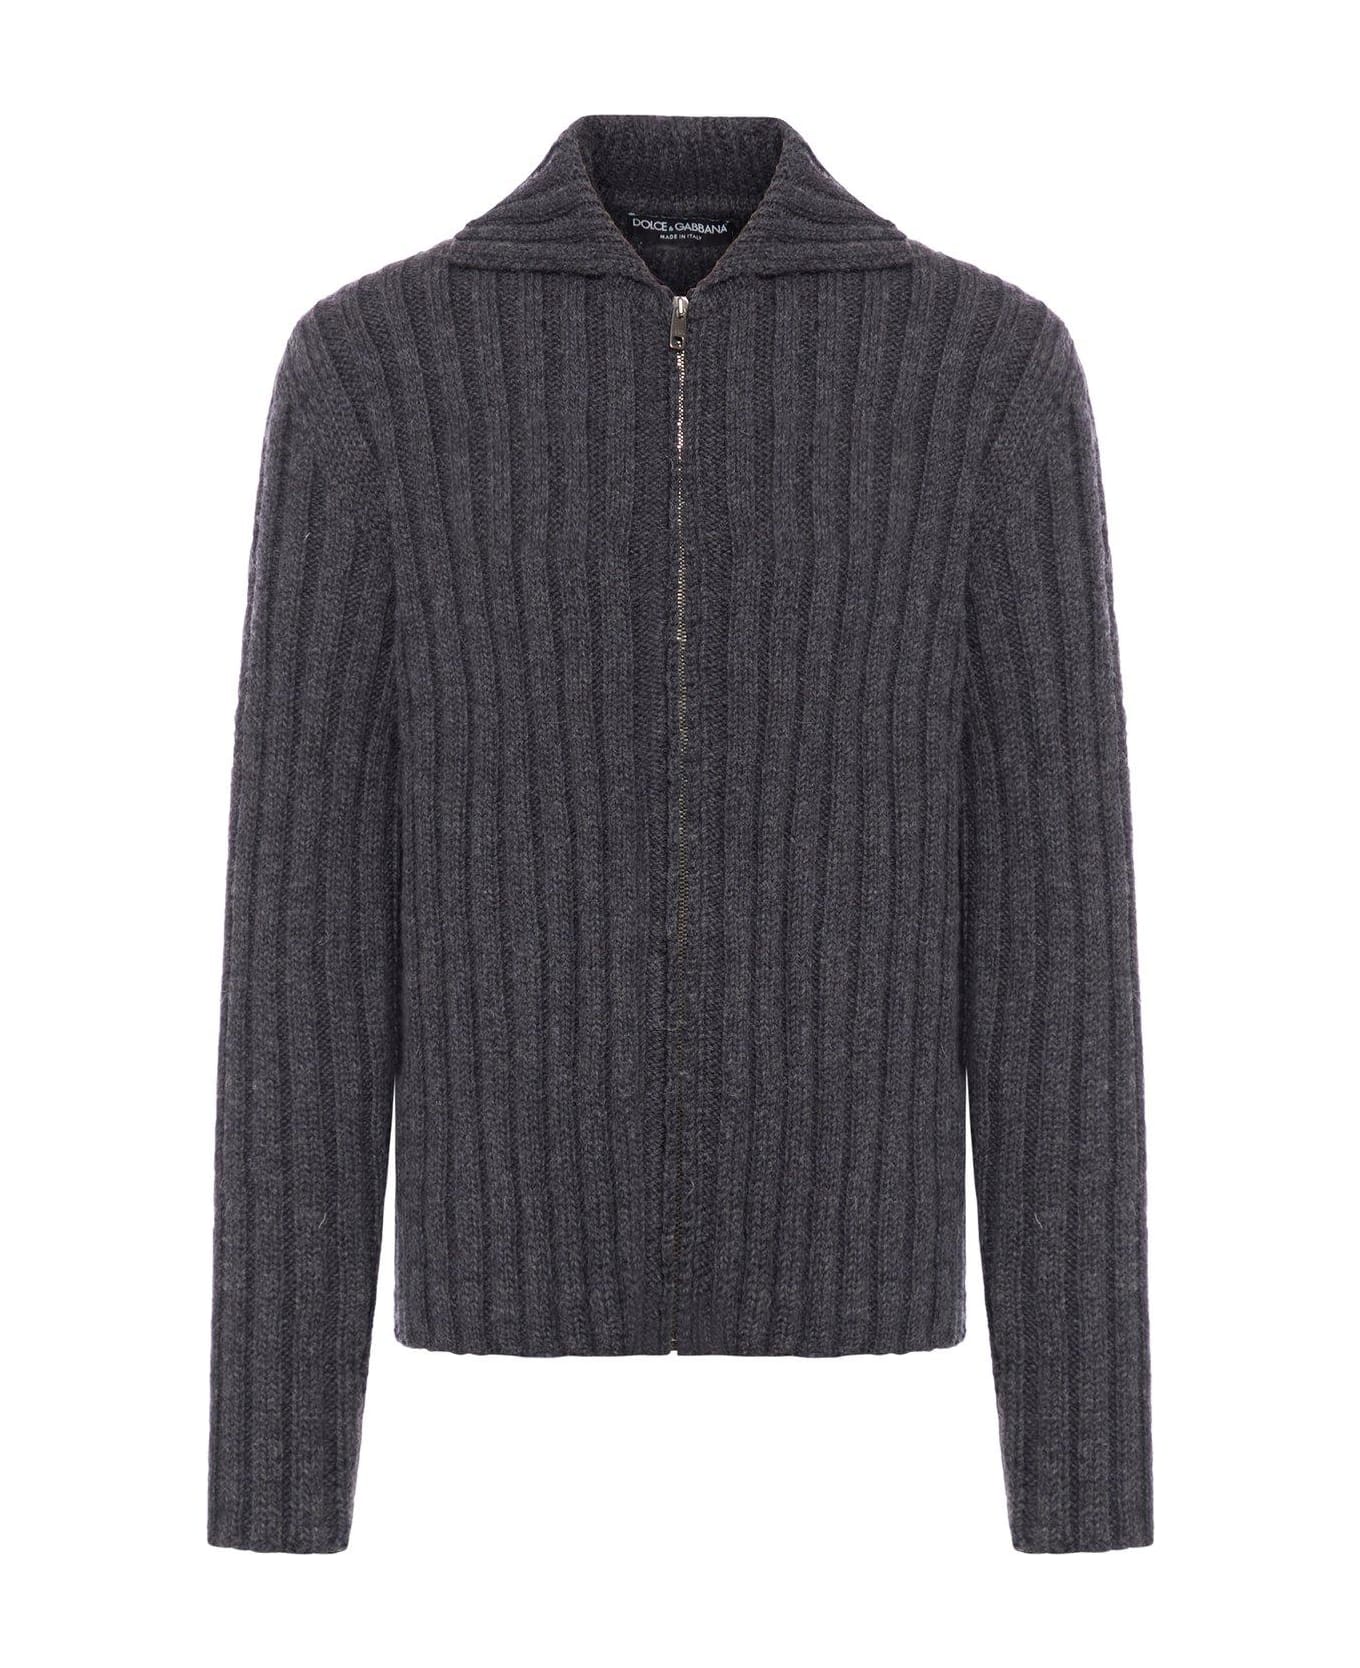 Dolce & Gabbana Zipped Knitted Sweater - Grey Melange